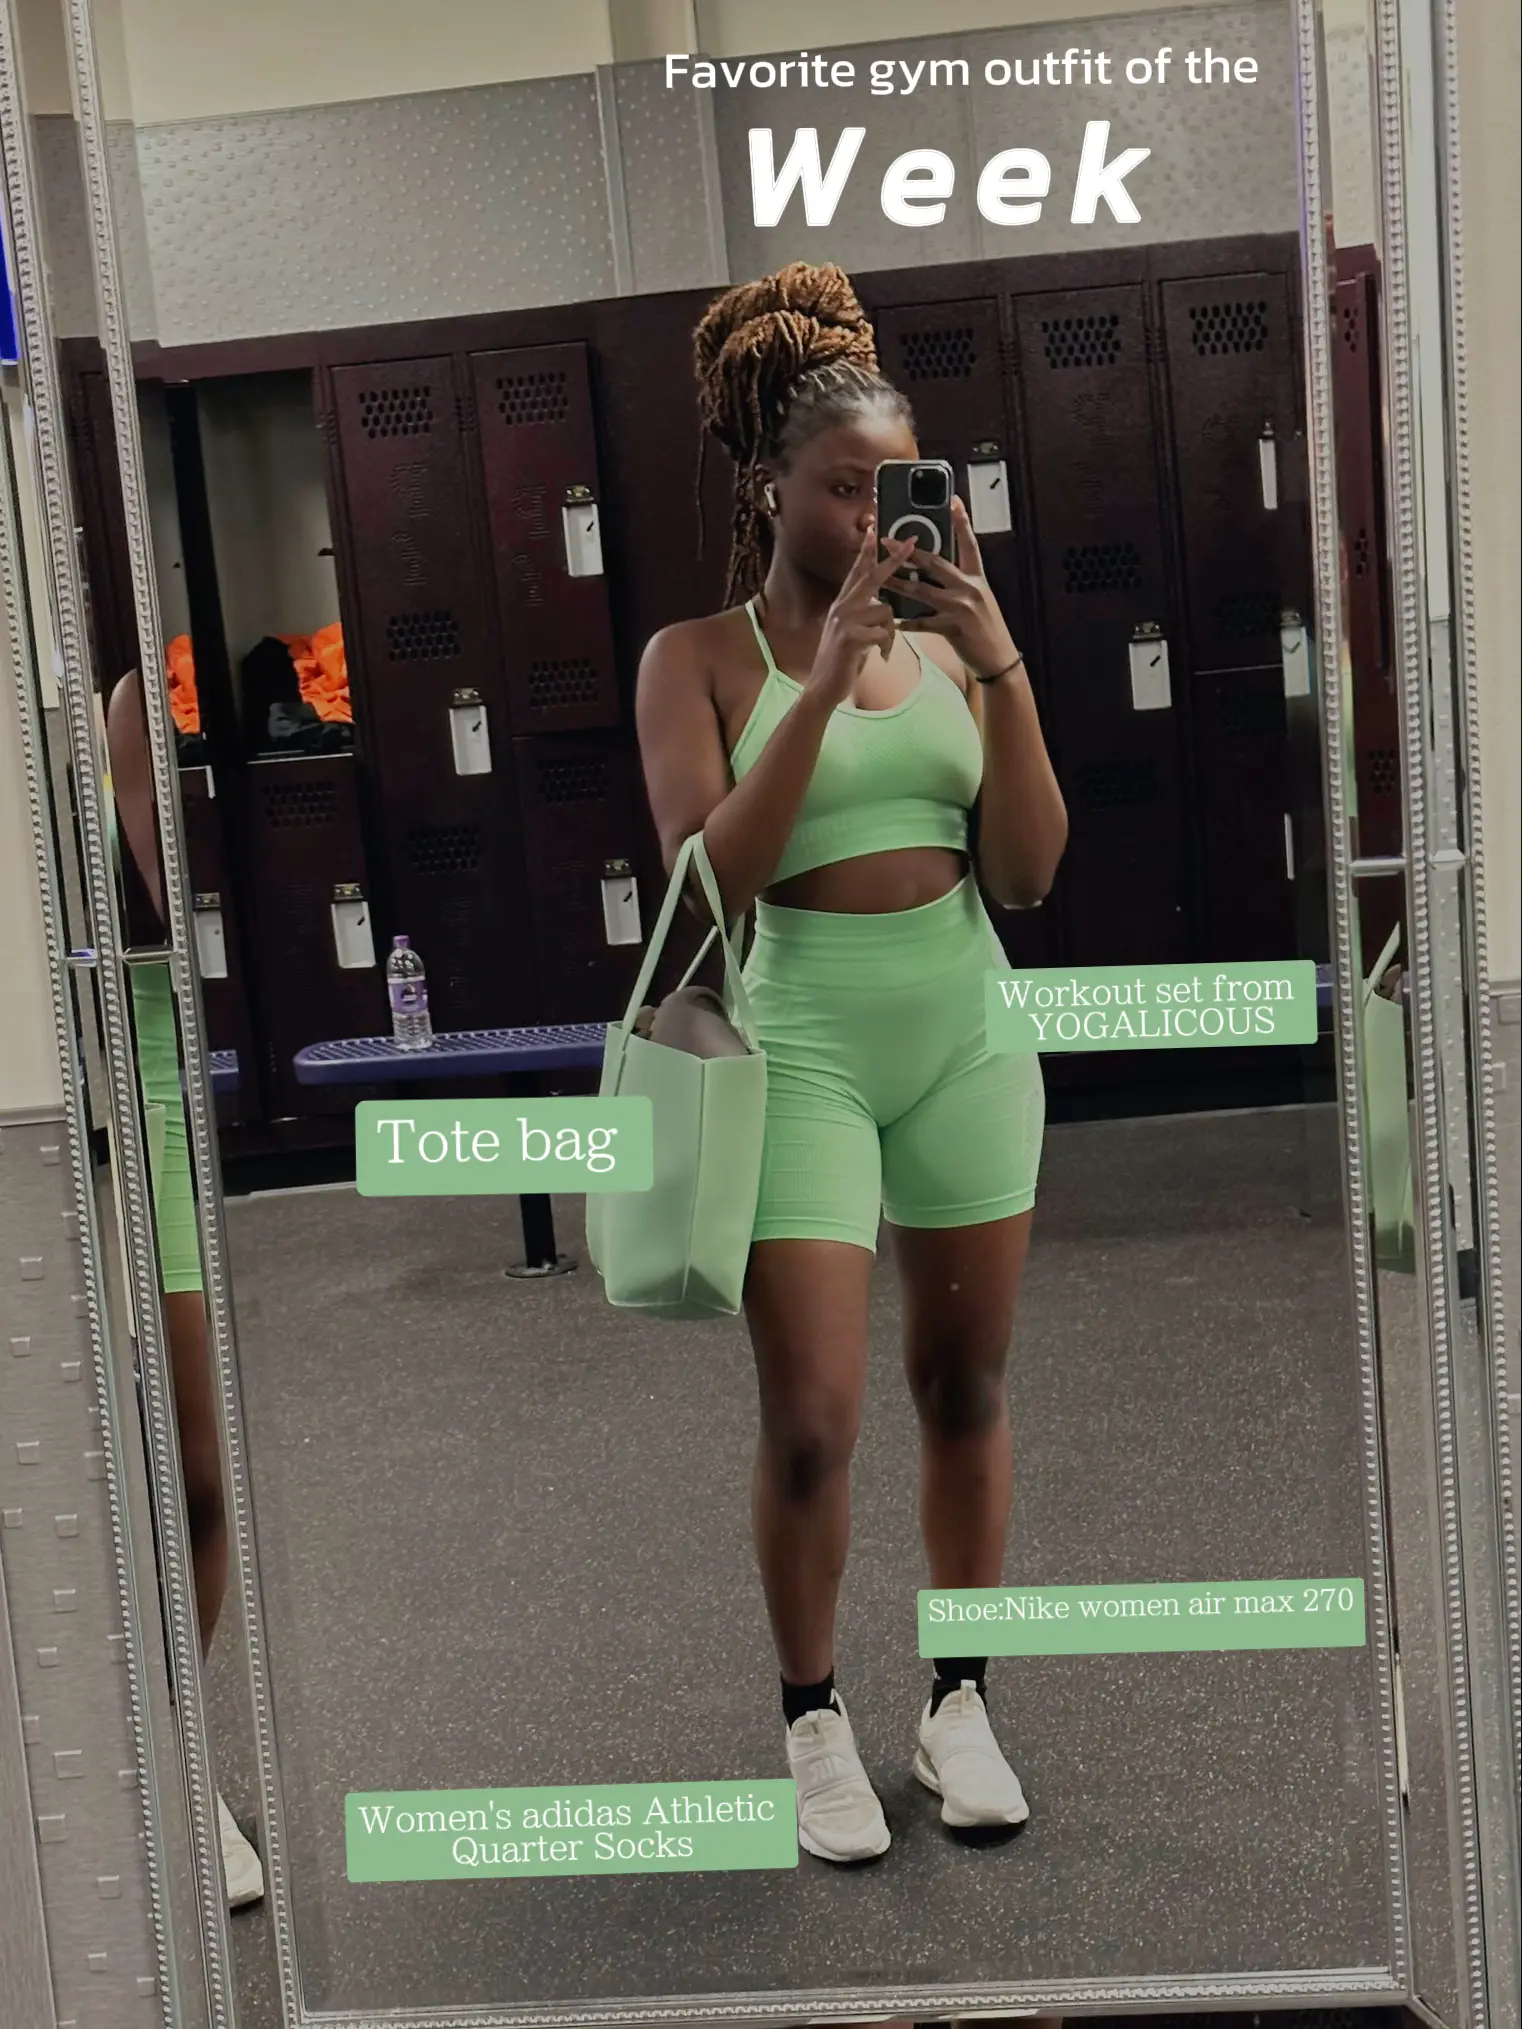 V-cut booty scrunch leggings ( Army Green ) – Fit by Cassie